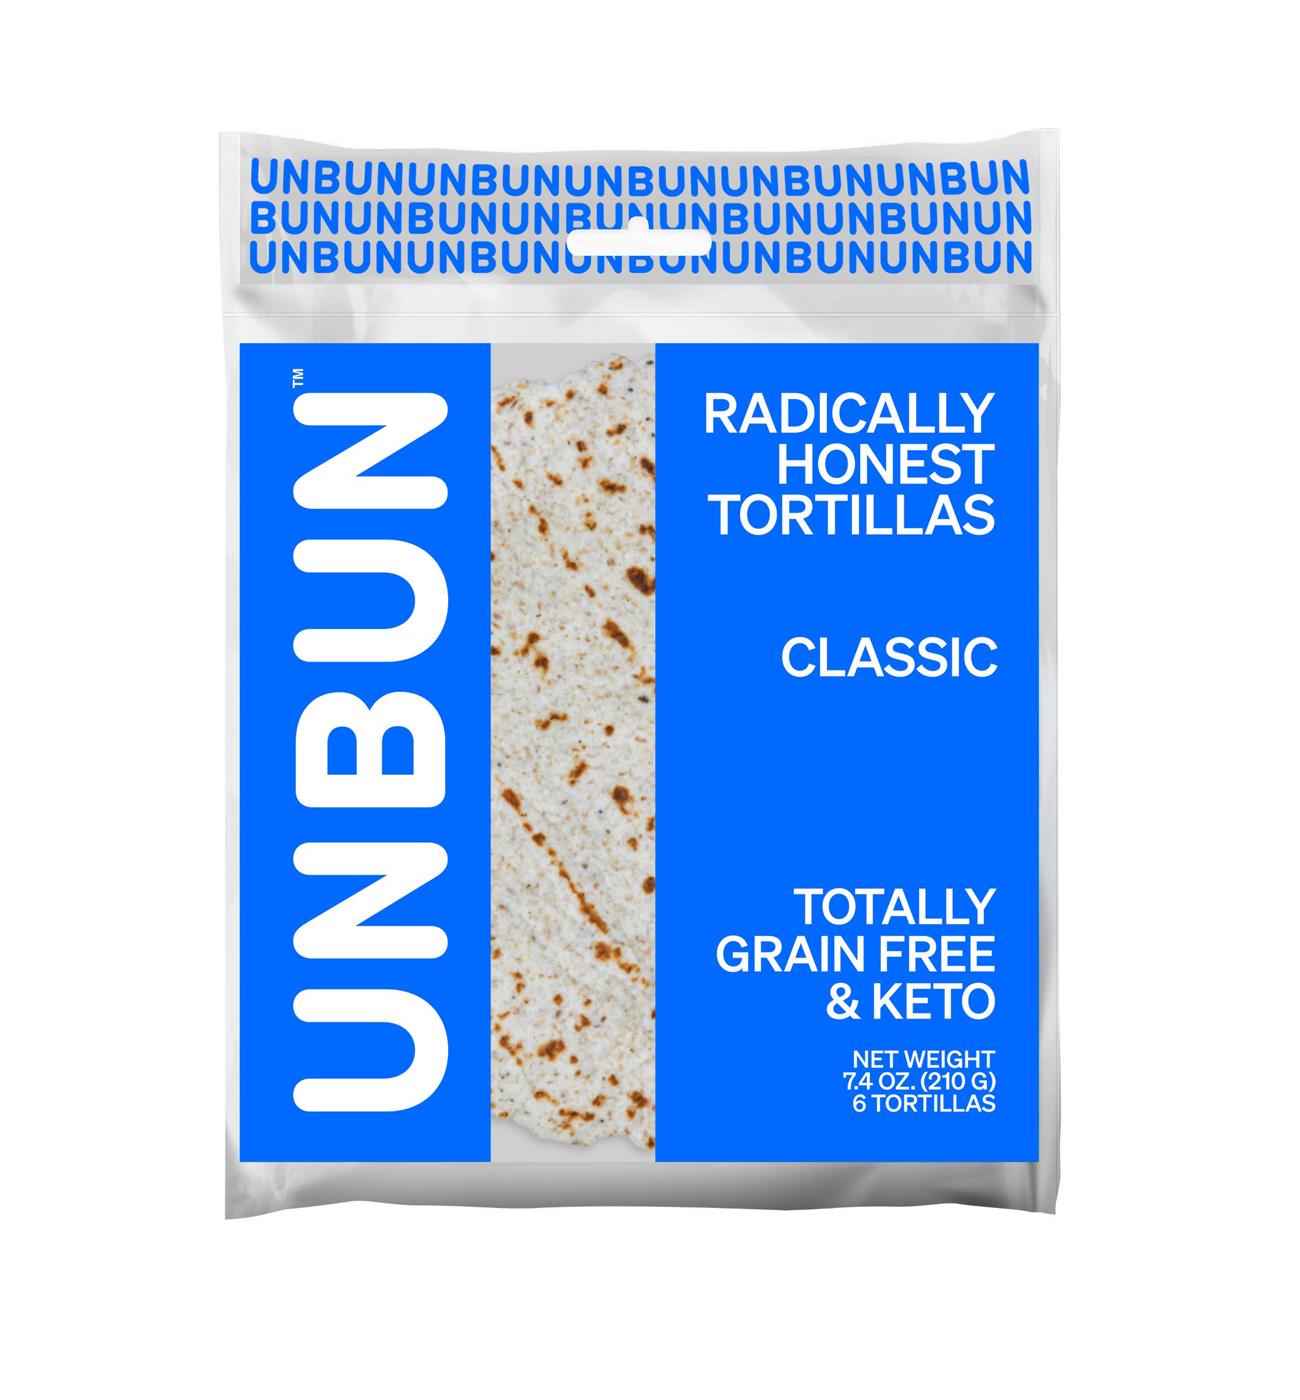 Unbun Grain Free Radically Honest Tortillas; image 1 of 2